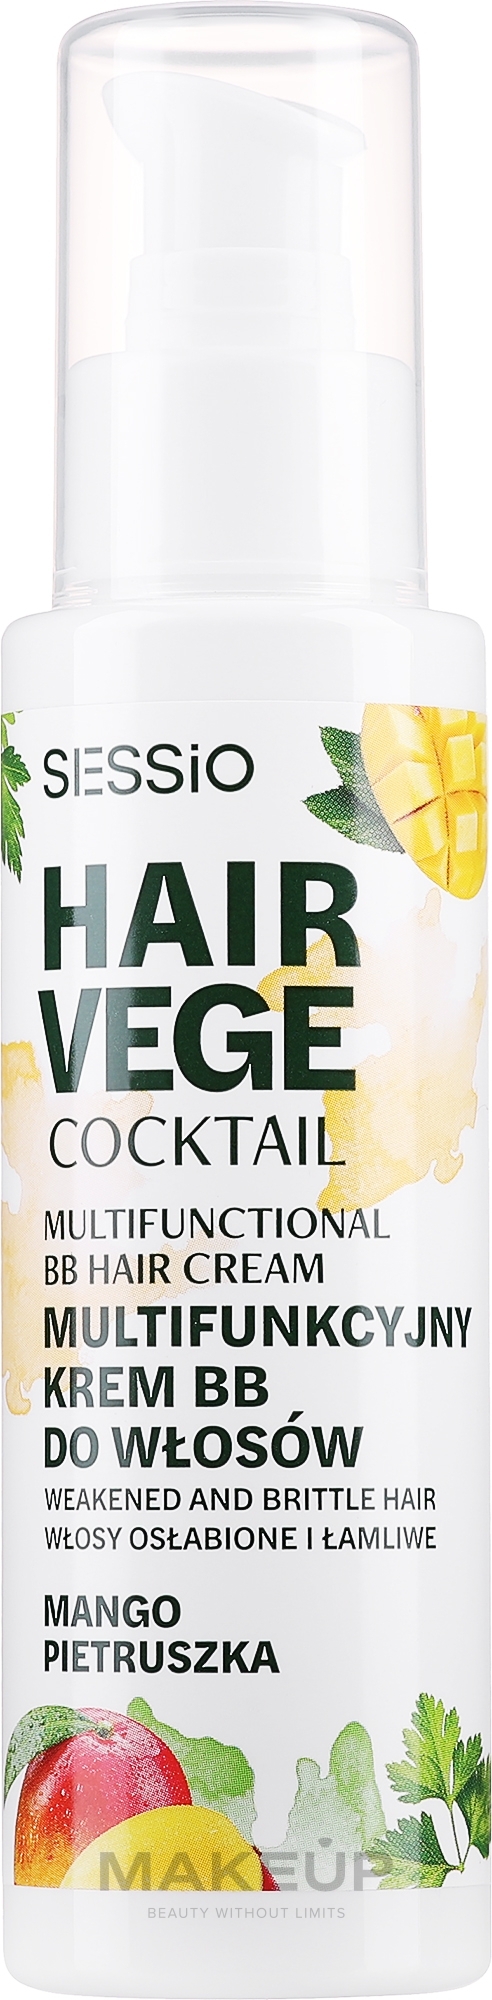 Багатофункціональний BB-крем для волосся "Манго" - Sessio Hair Vege Cocktail Multifunctional BB Hair Crem — фото 100g